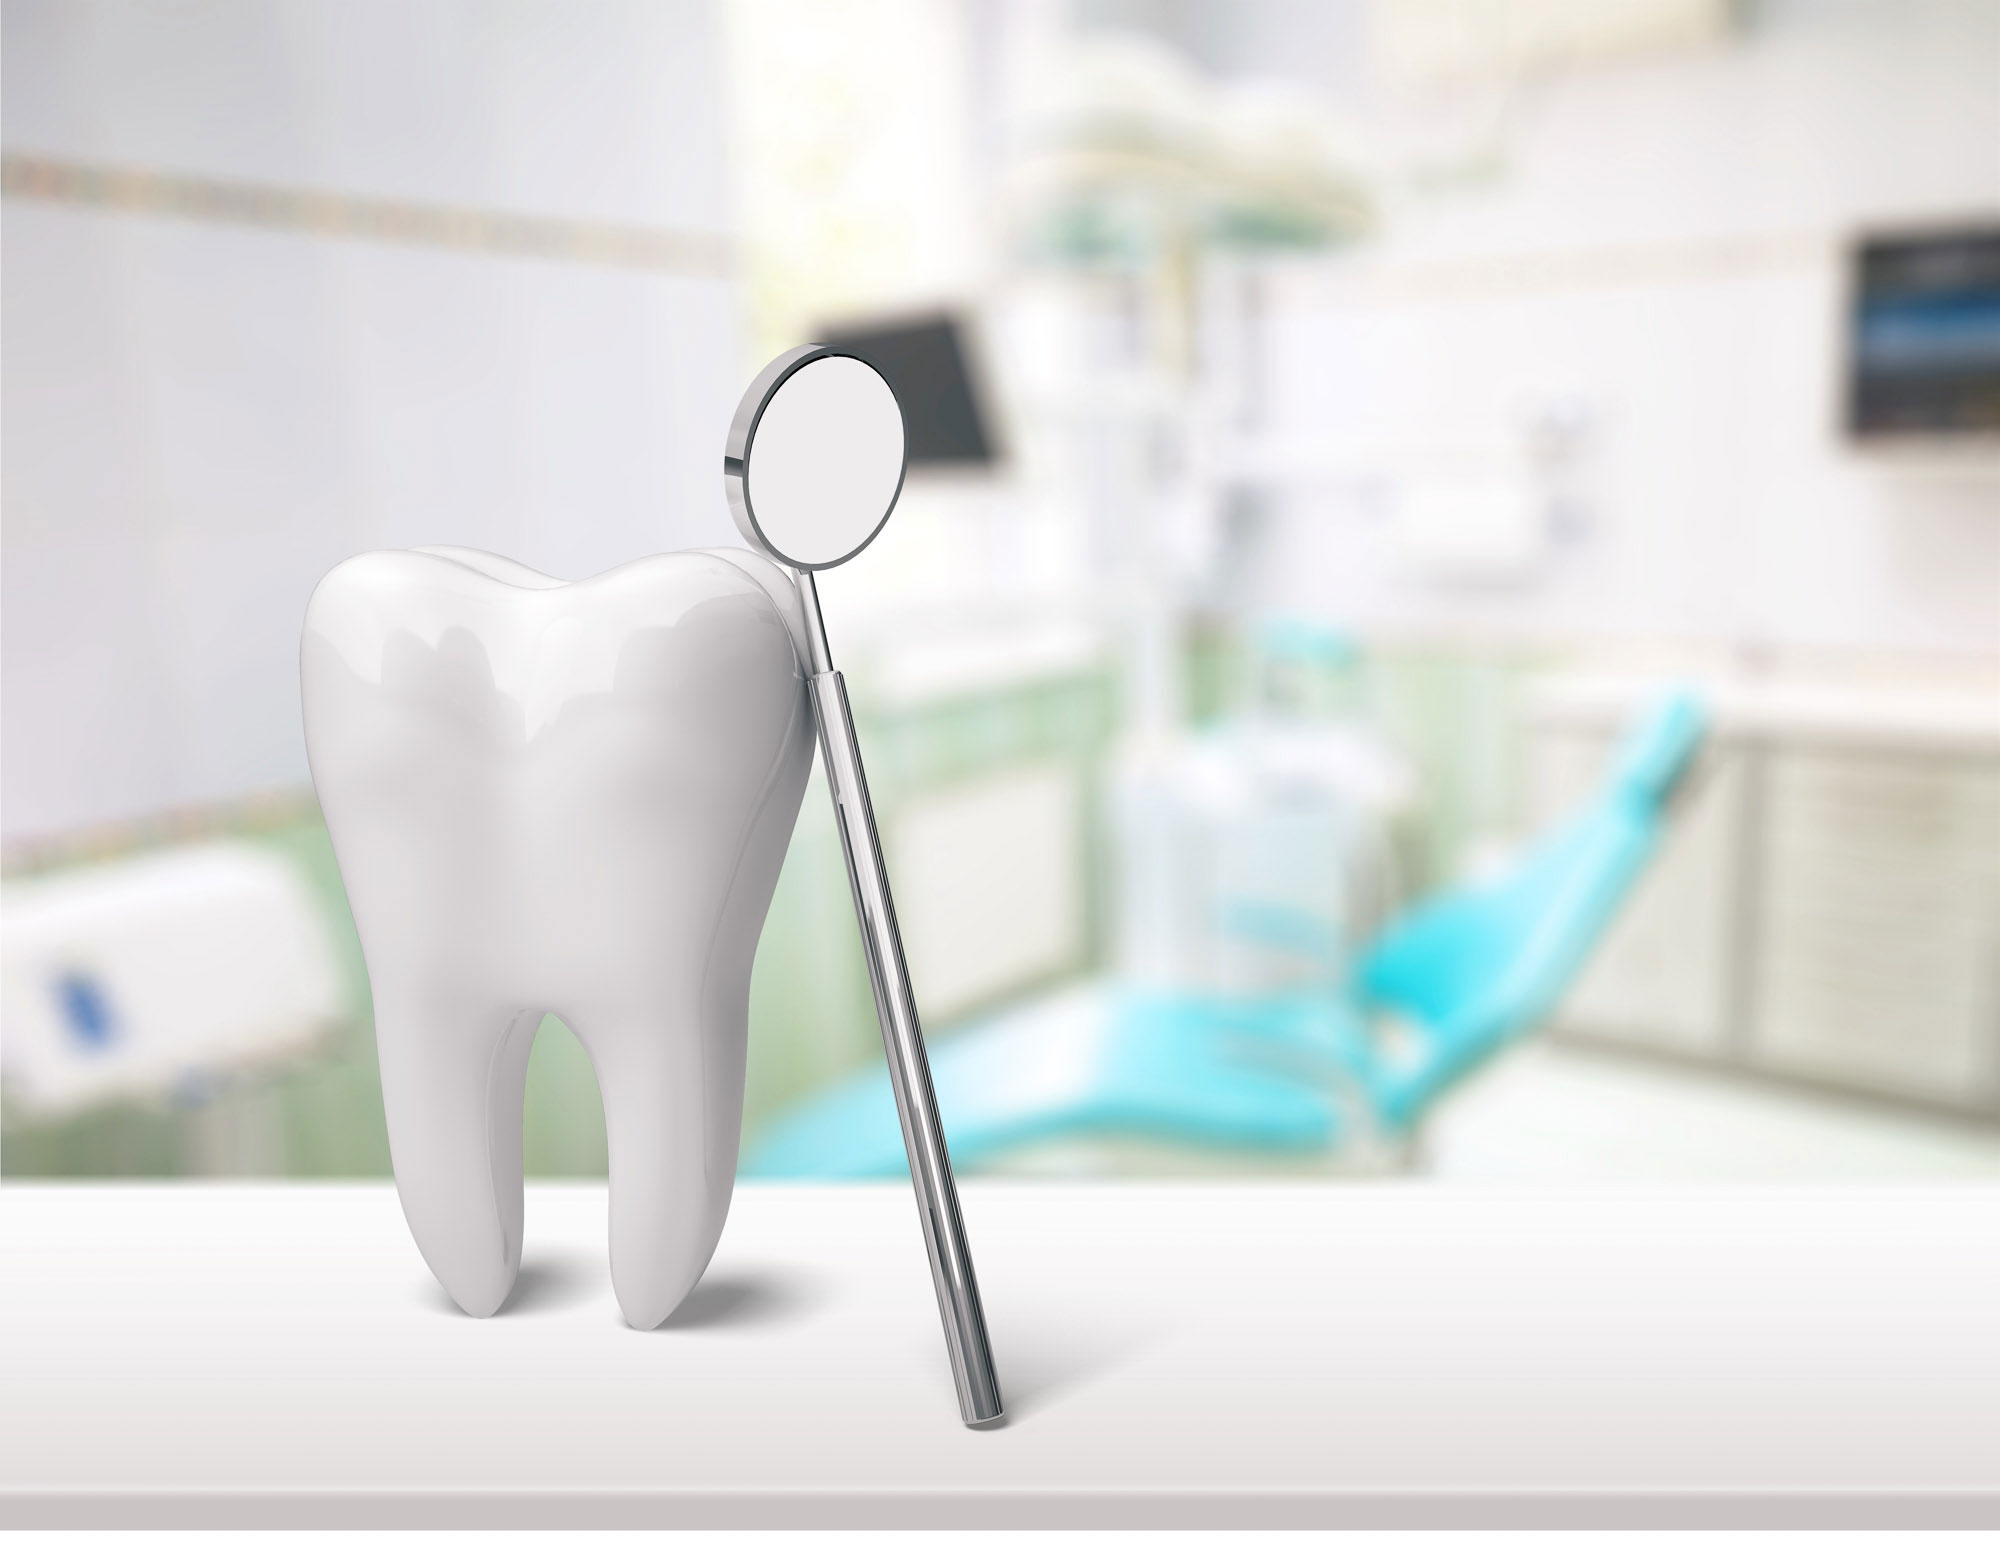 عوارض ایمپلنت دندان چیست؟